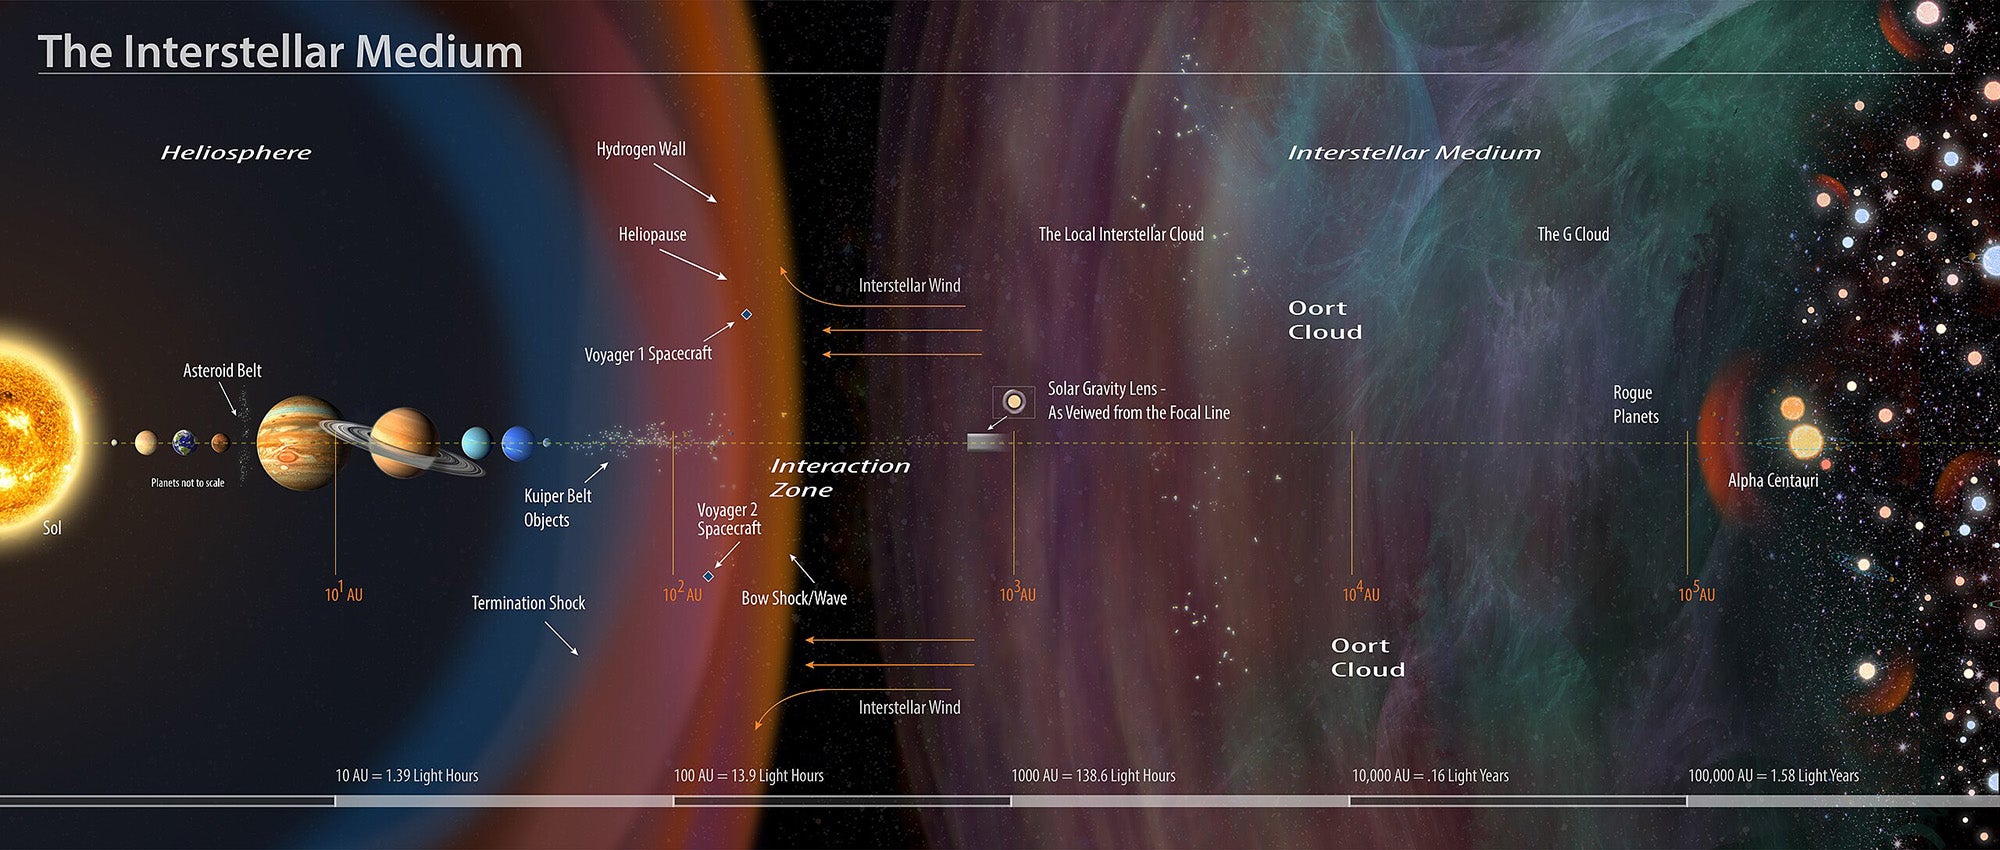 An annotated illustration of the interstellar medium